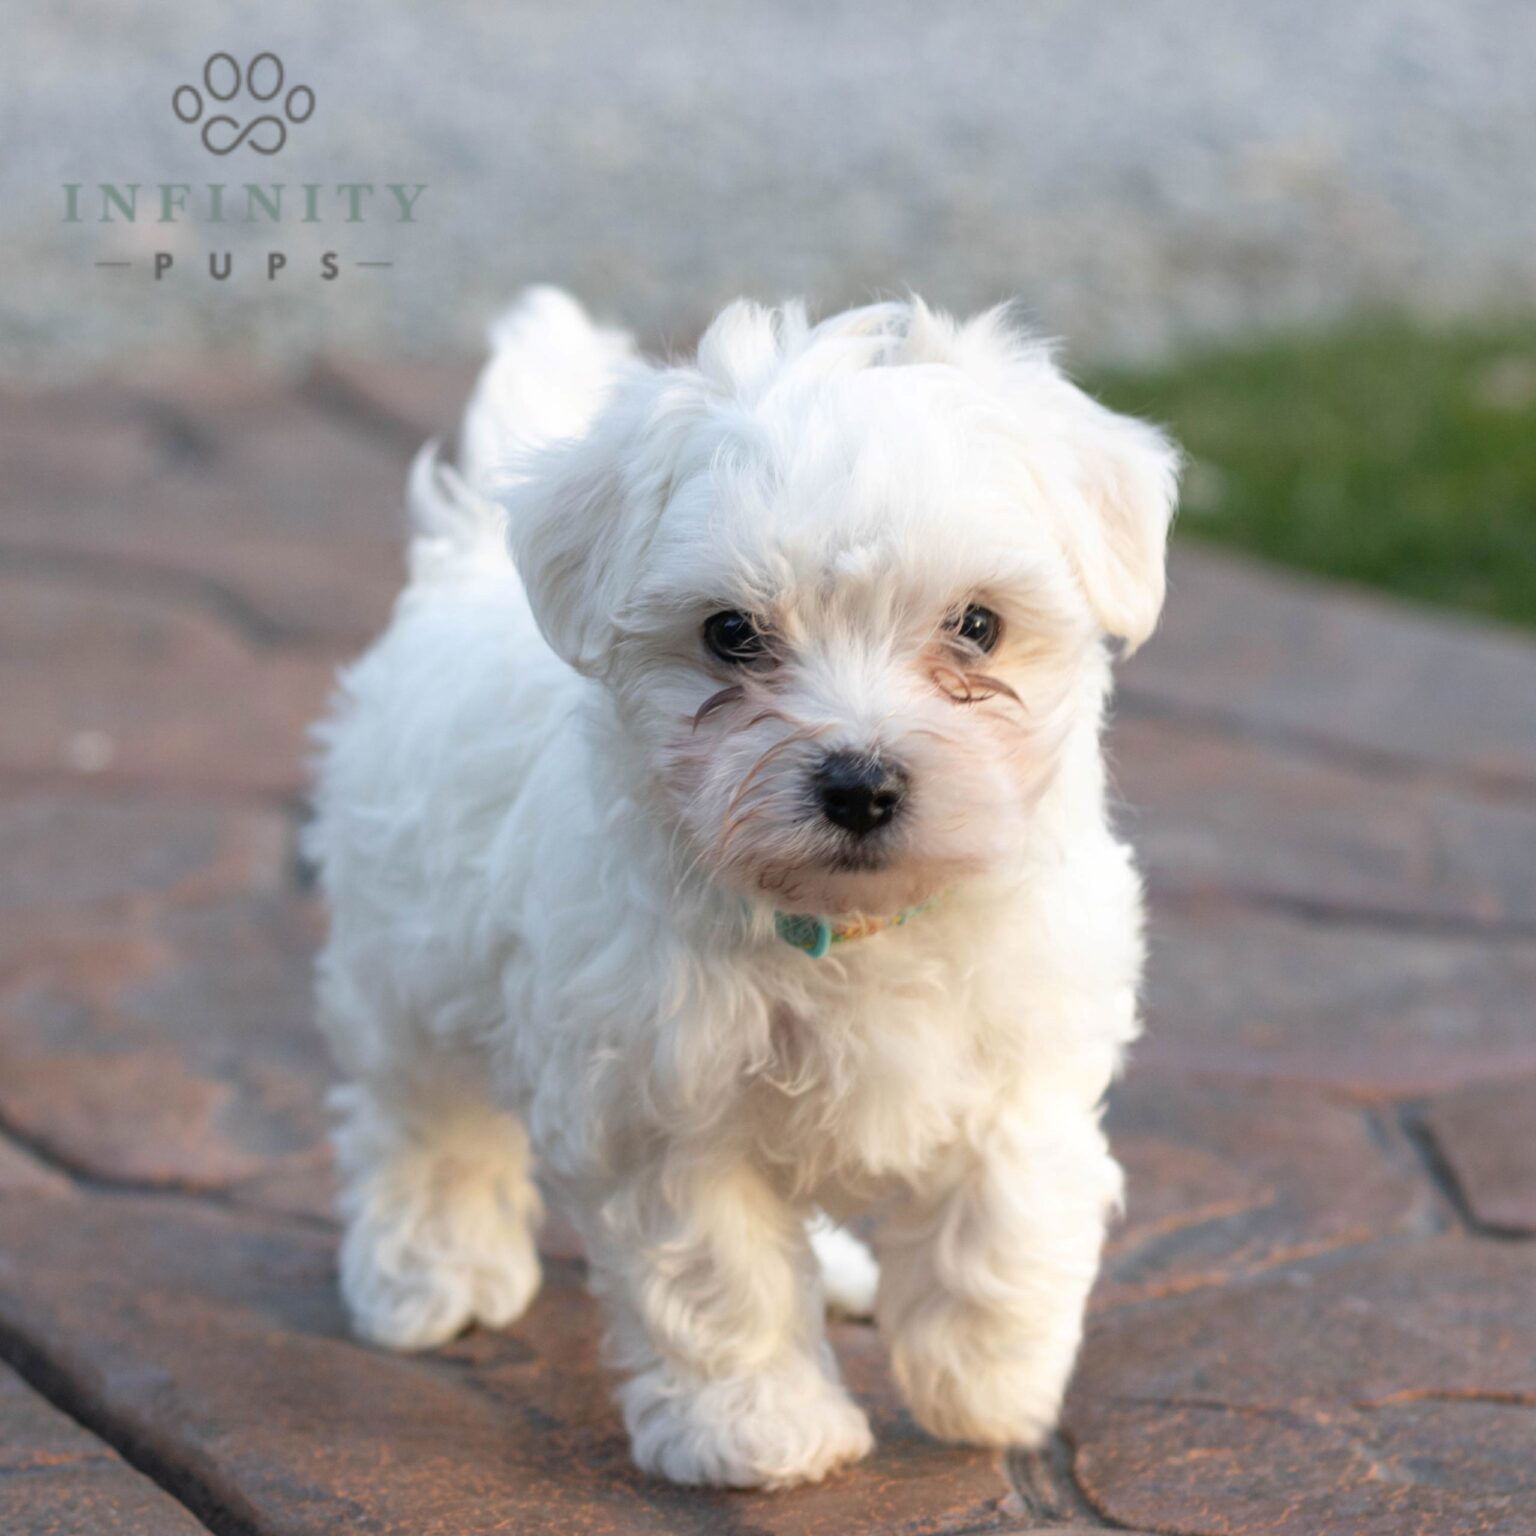 Jasper - AKC Maltese puppy standing